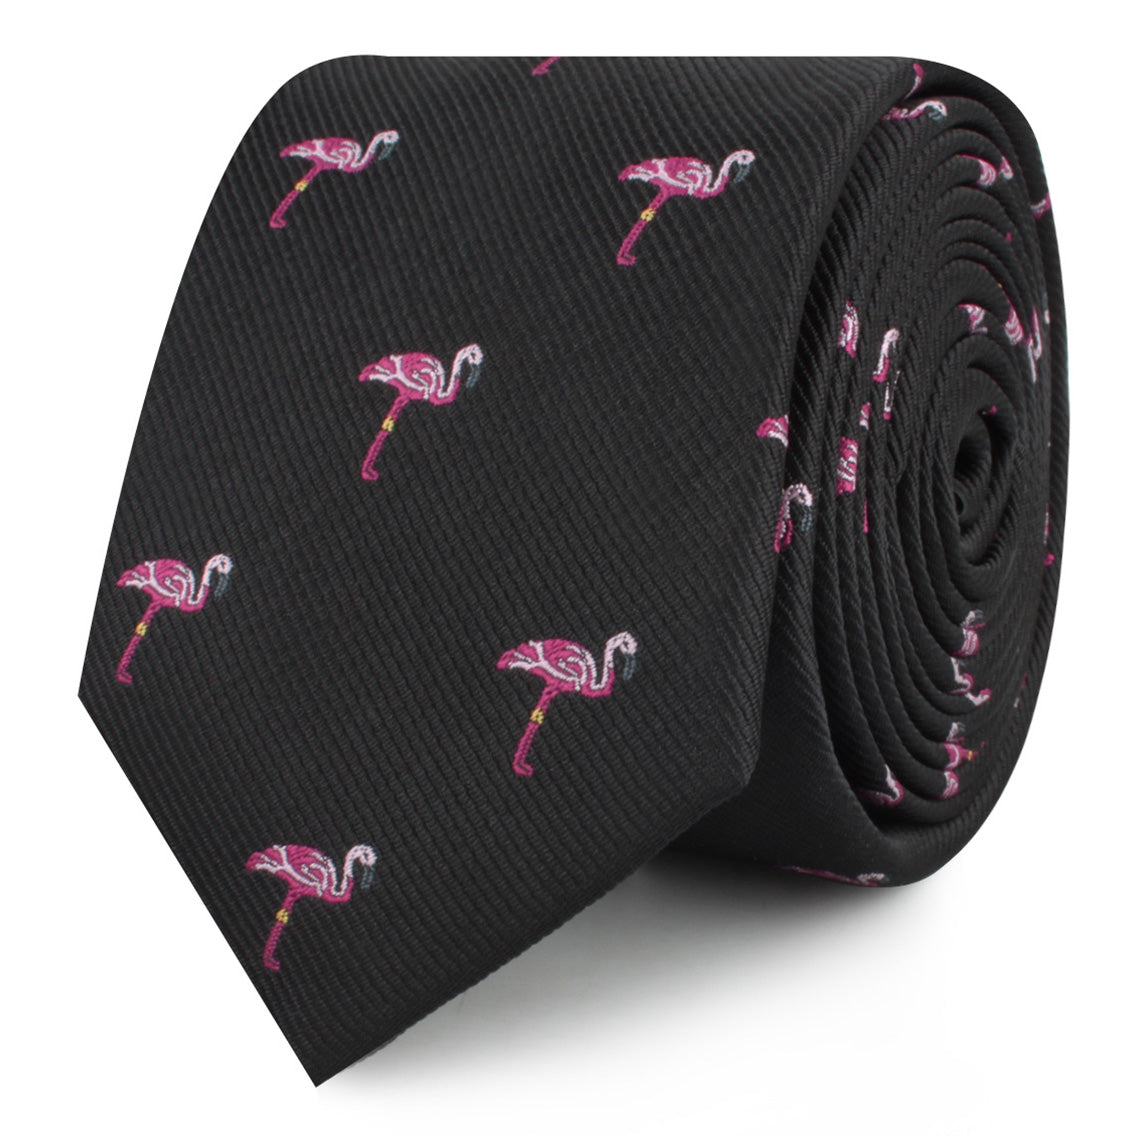 Aruba Island Black Flamingo Skinny Ties